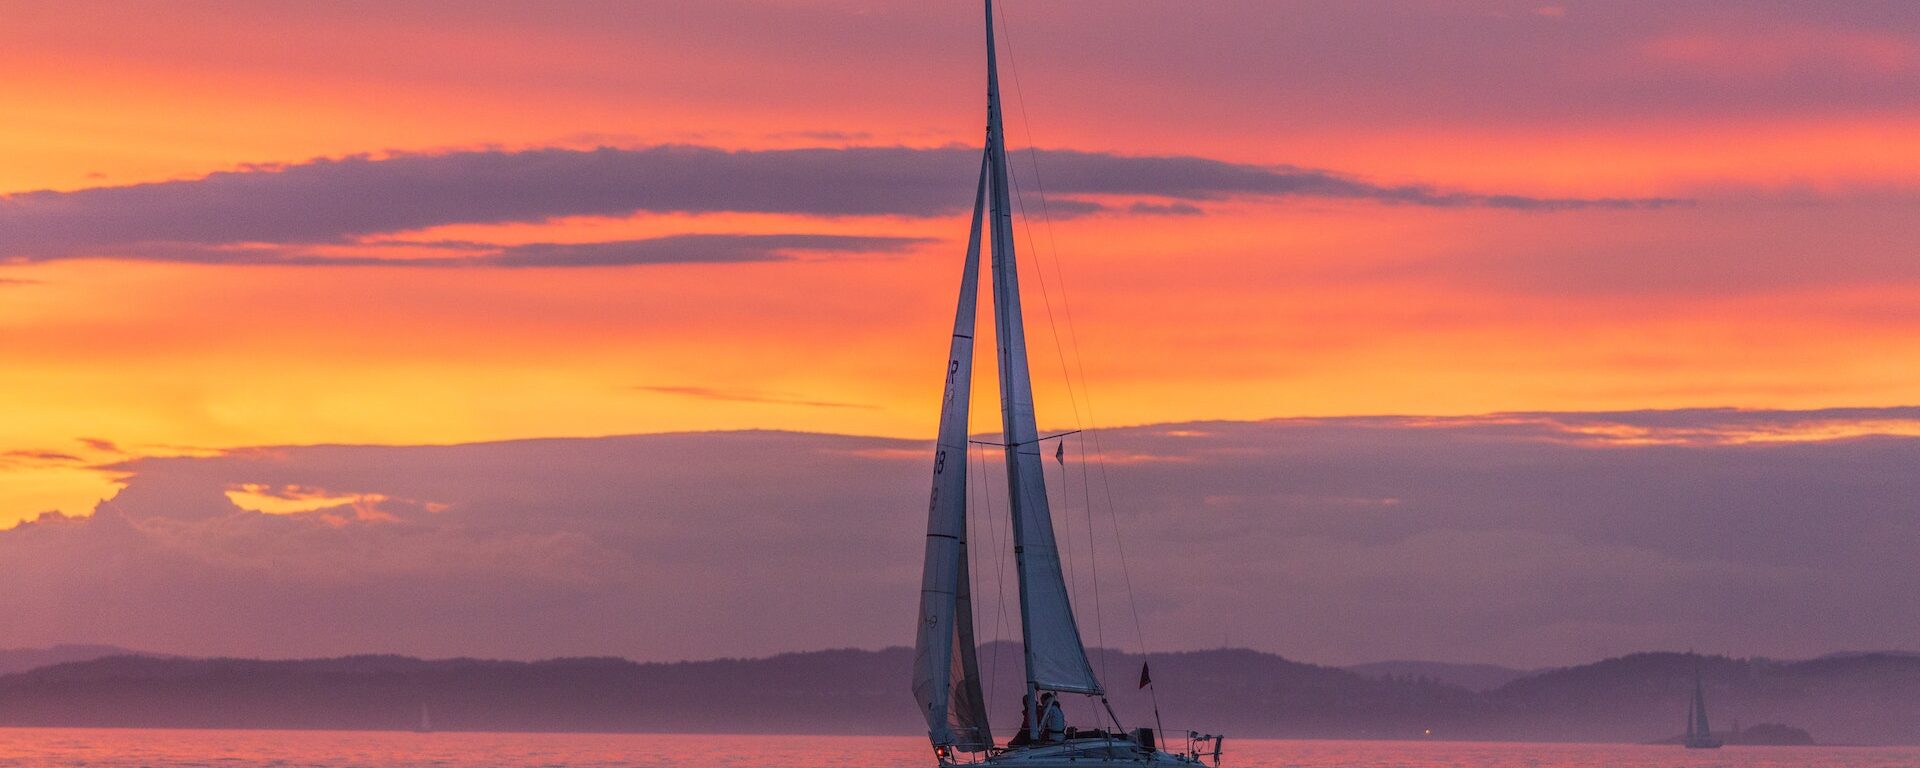 Фото додано Інге Валлумрод: https://www.pexels.com/en-pl/photo/sailboat-during-the-golden-hour-2562096/